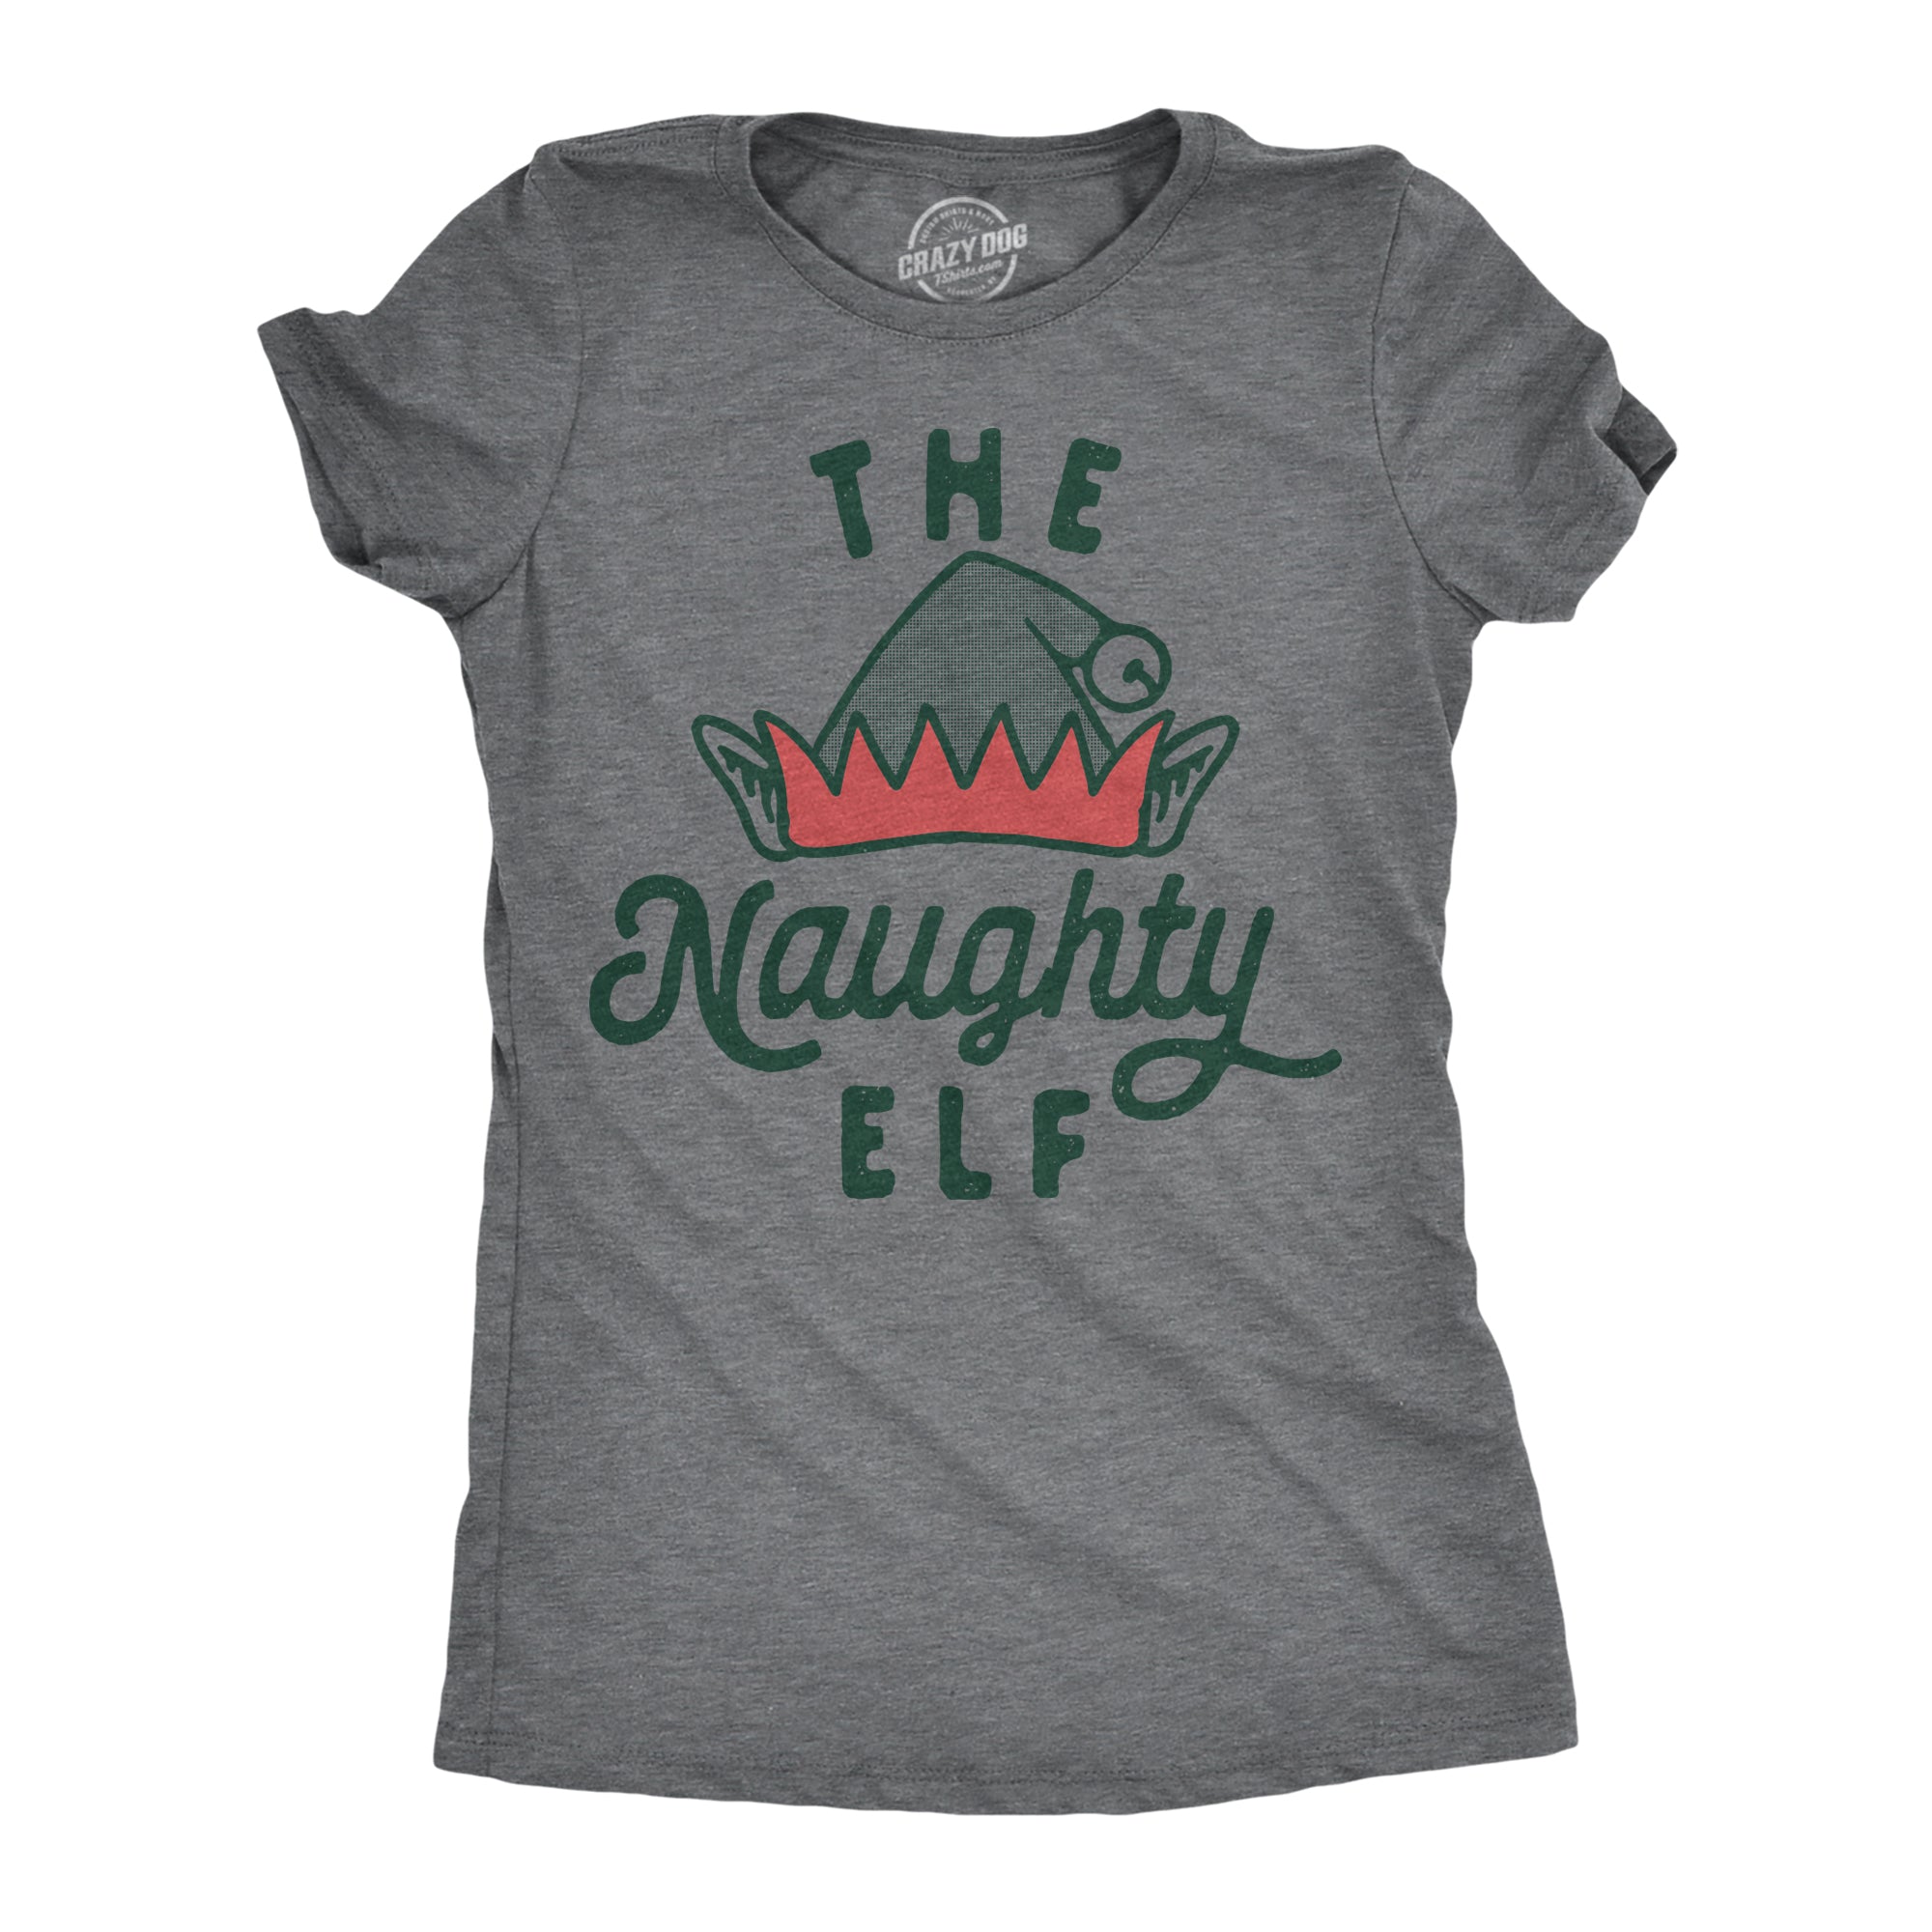 Funny Dark Heather Grey - NAUGHTY The Naughty Elf Womens T Shirt Nerdy Christmas Sarcastic Tee